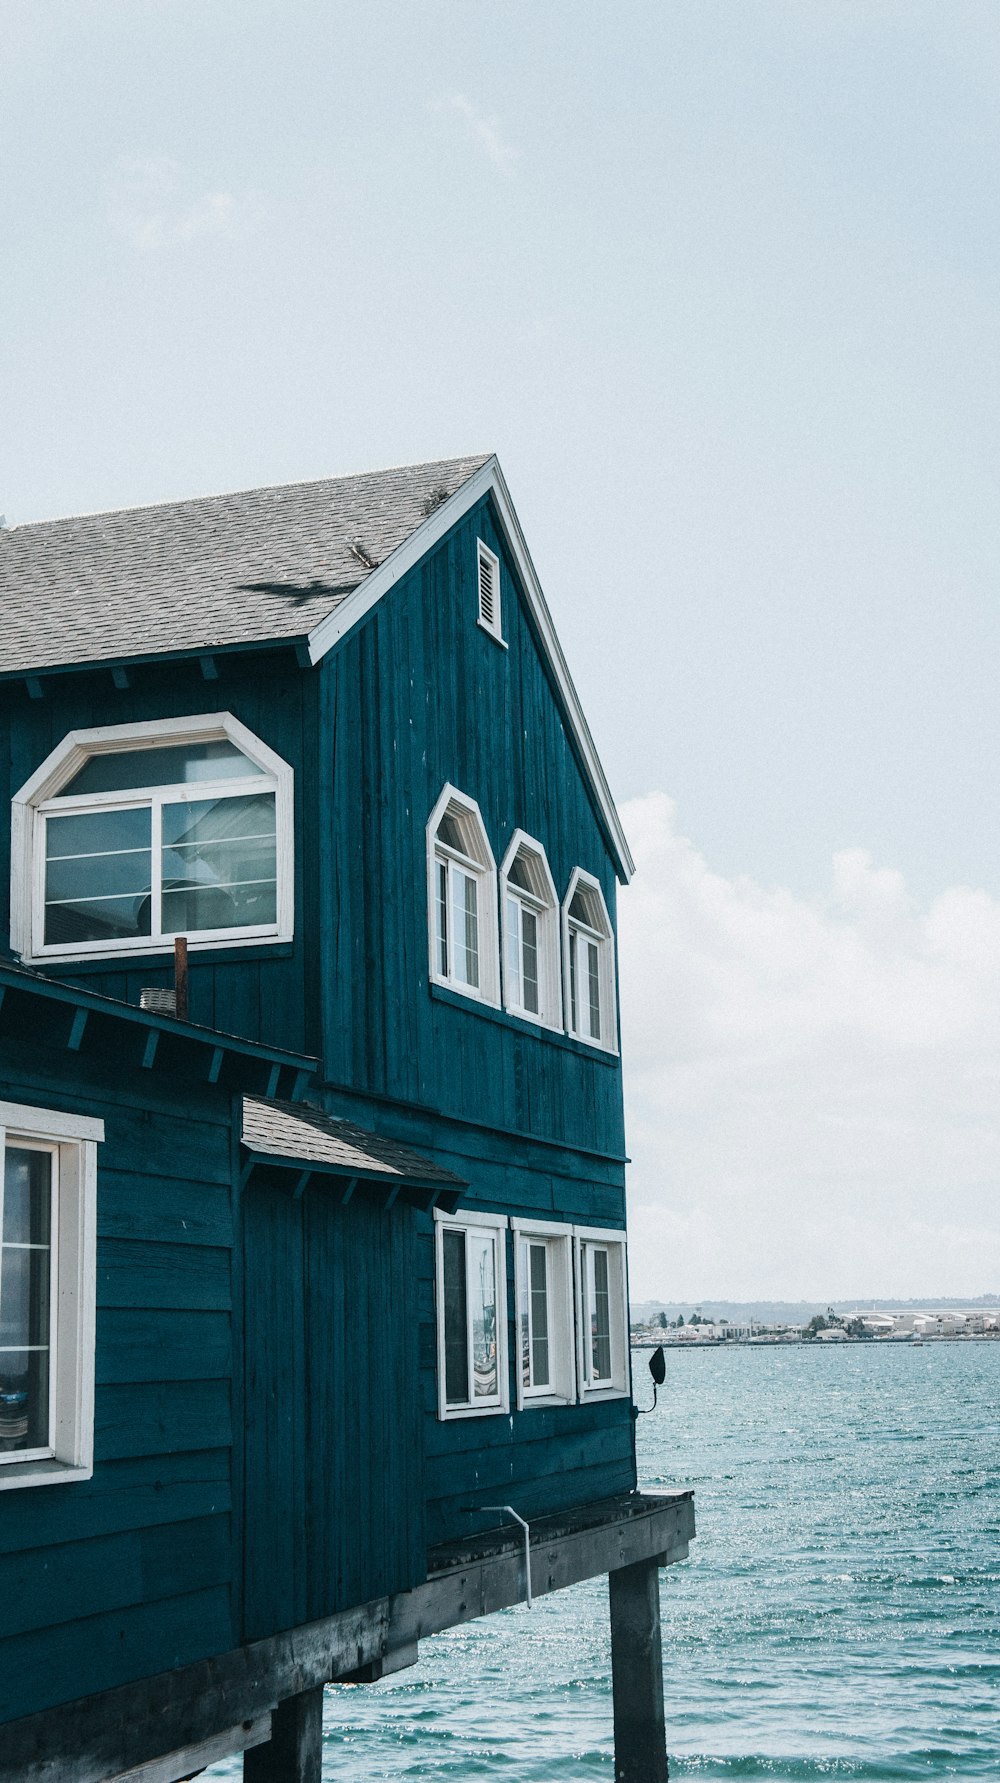 a blue house on a dock